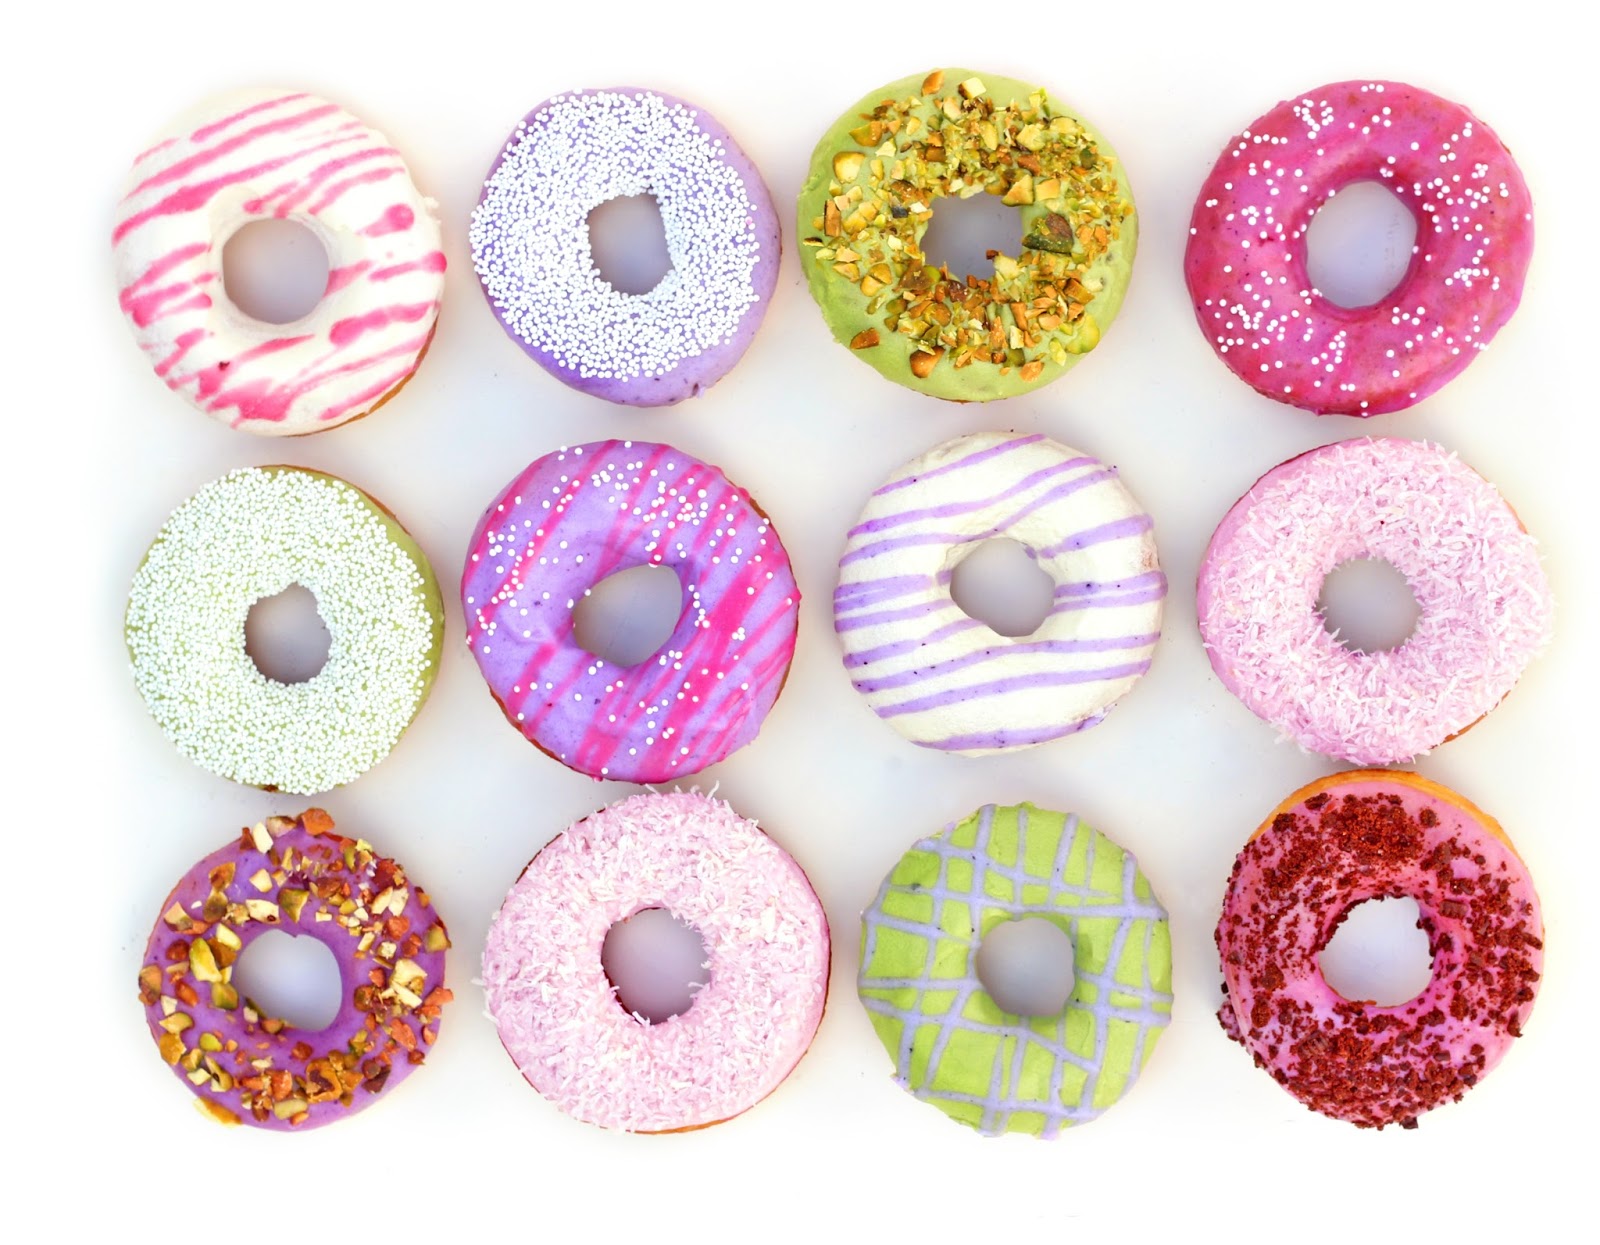 Treese, Love, Happiness.: Vegan Doughnuts!